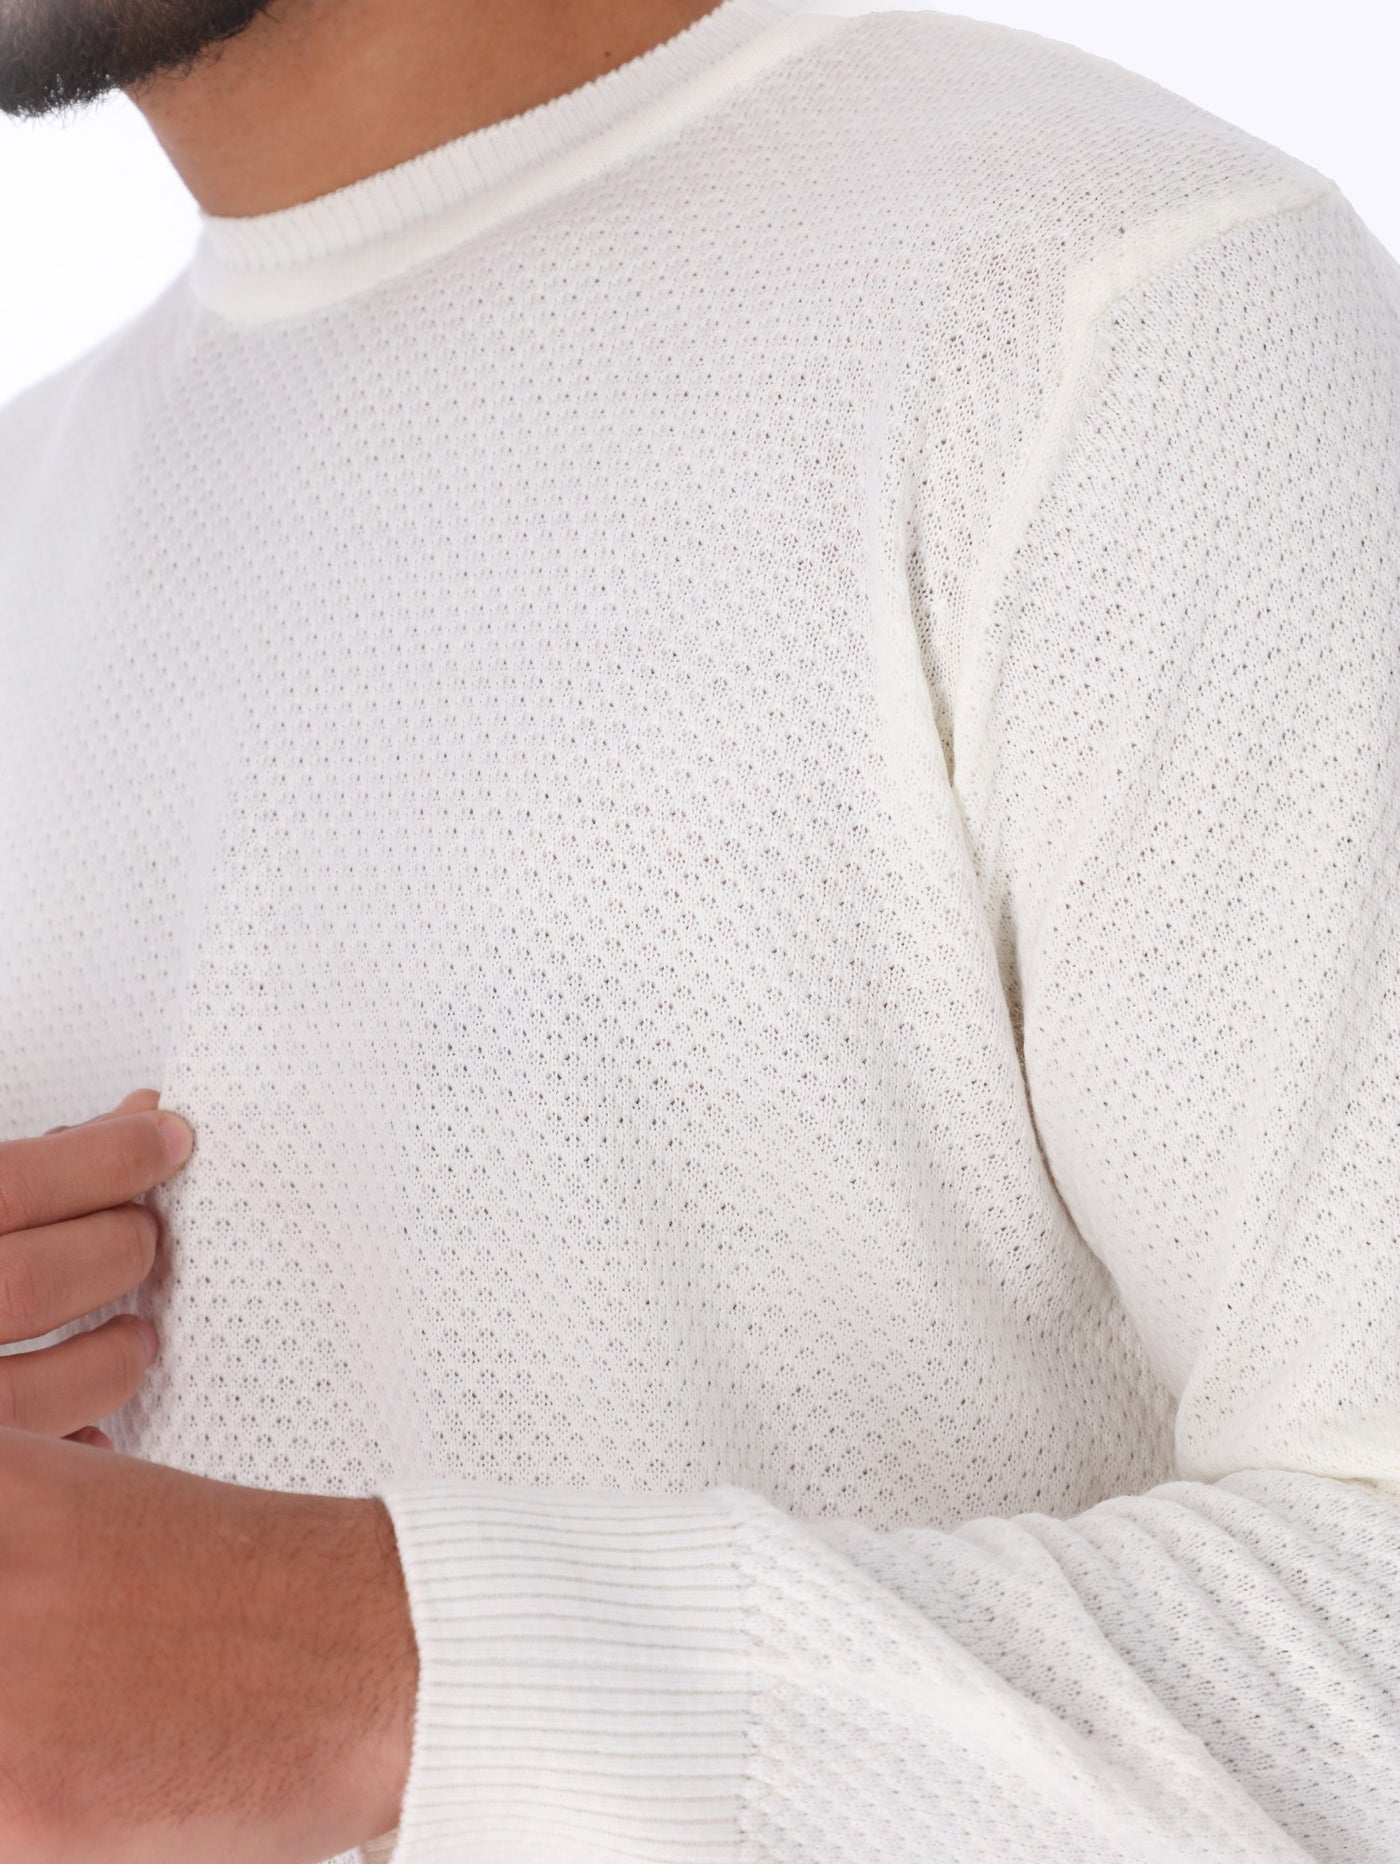 Sweater - Textured